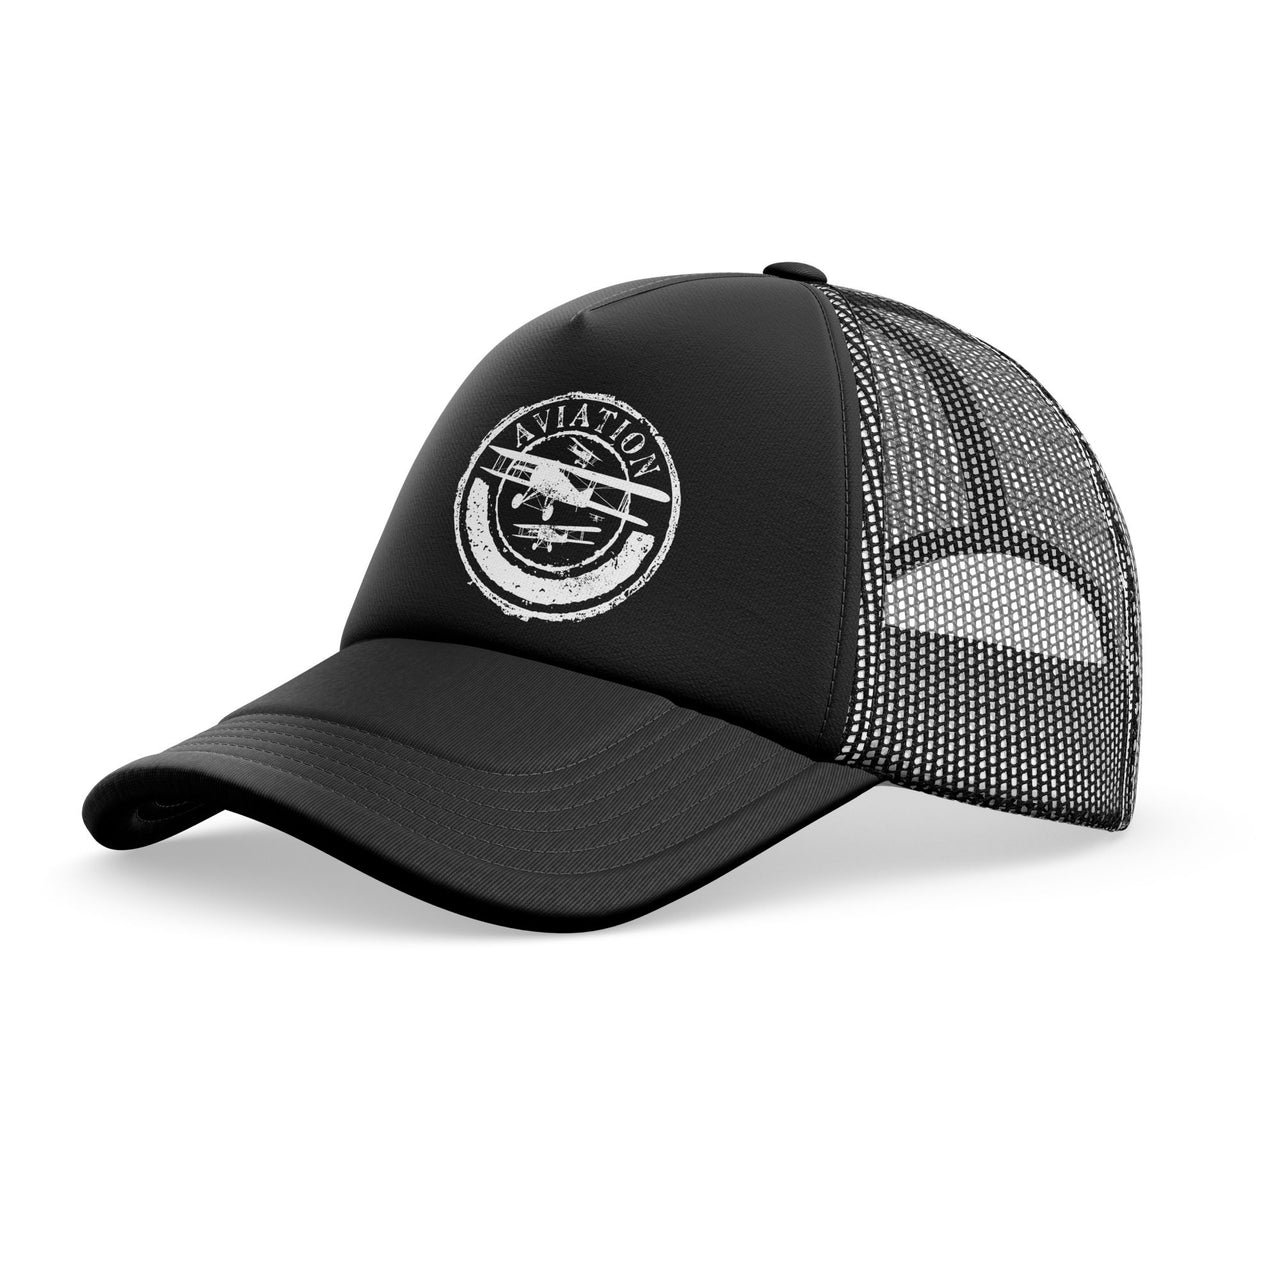 Aviation Lovers Designed Trucker Caps & Hats